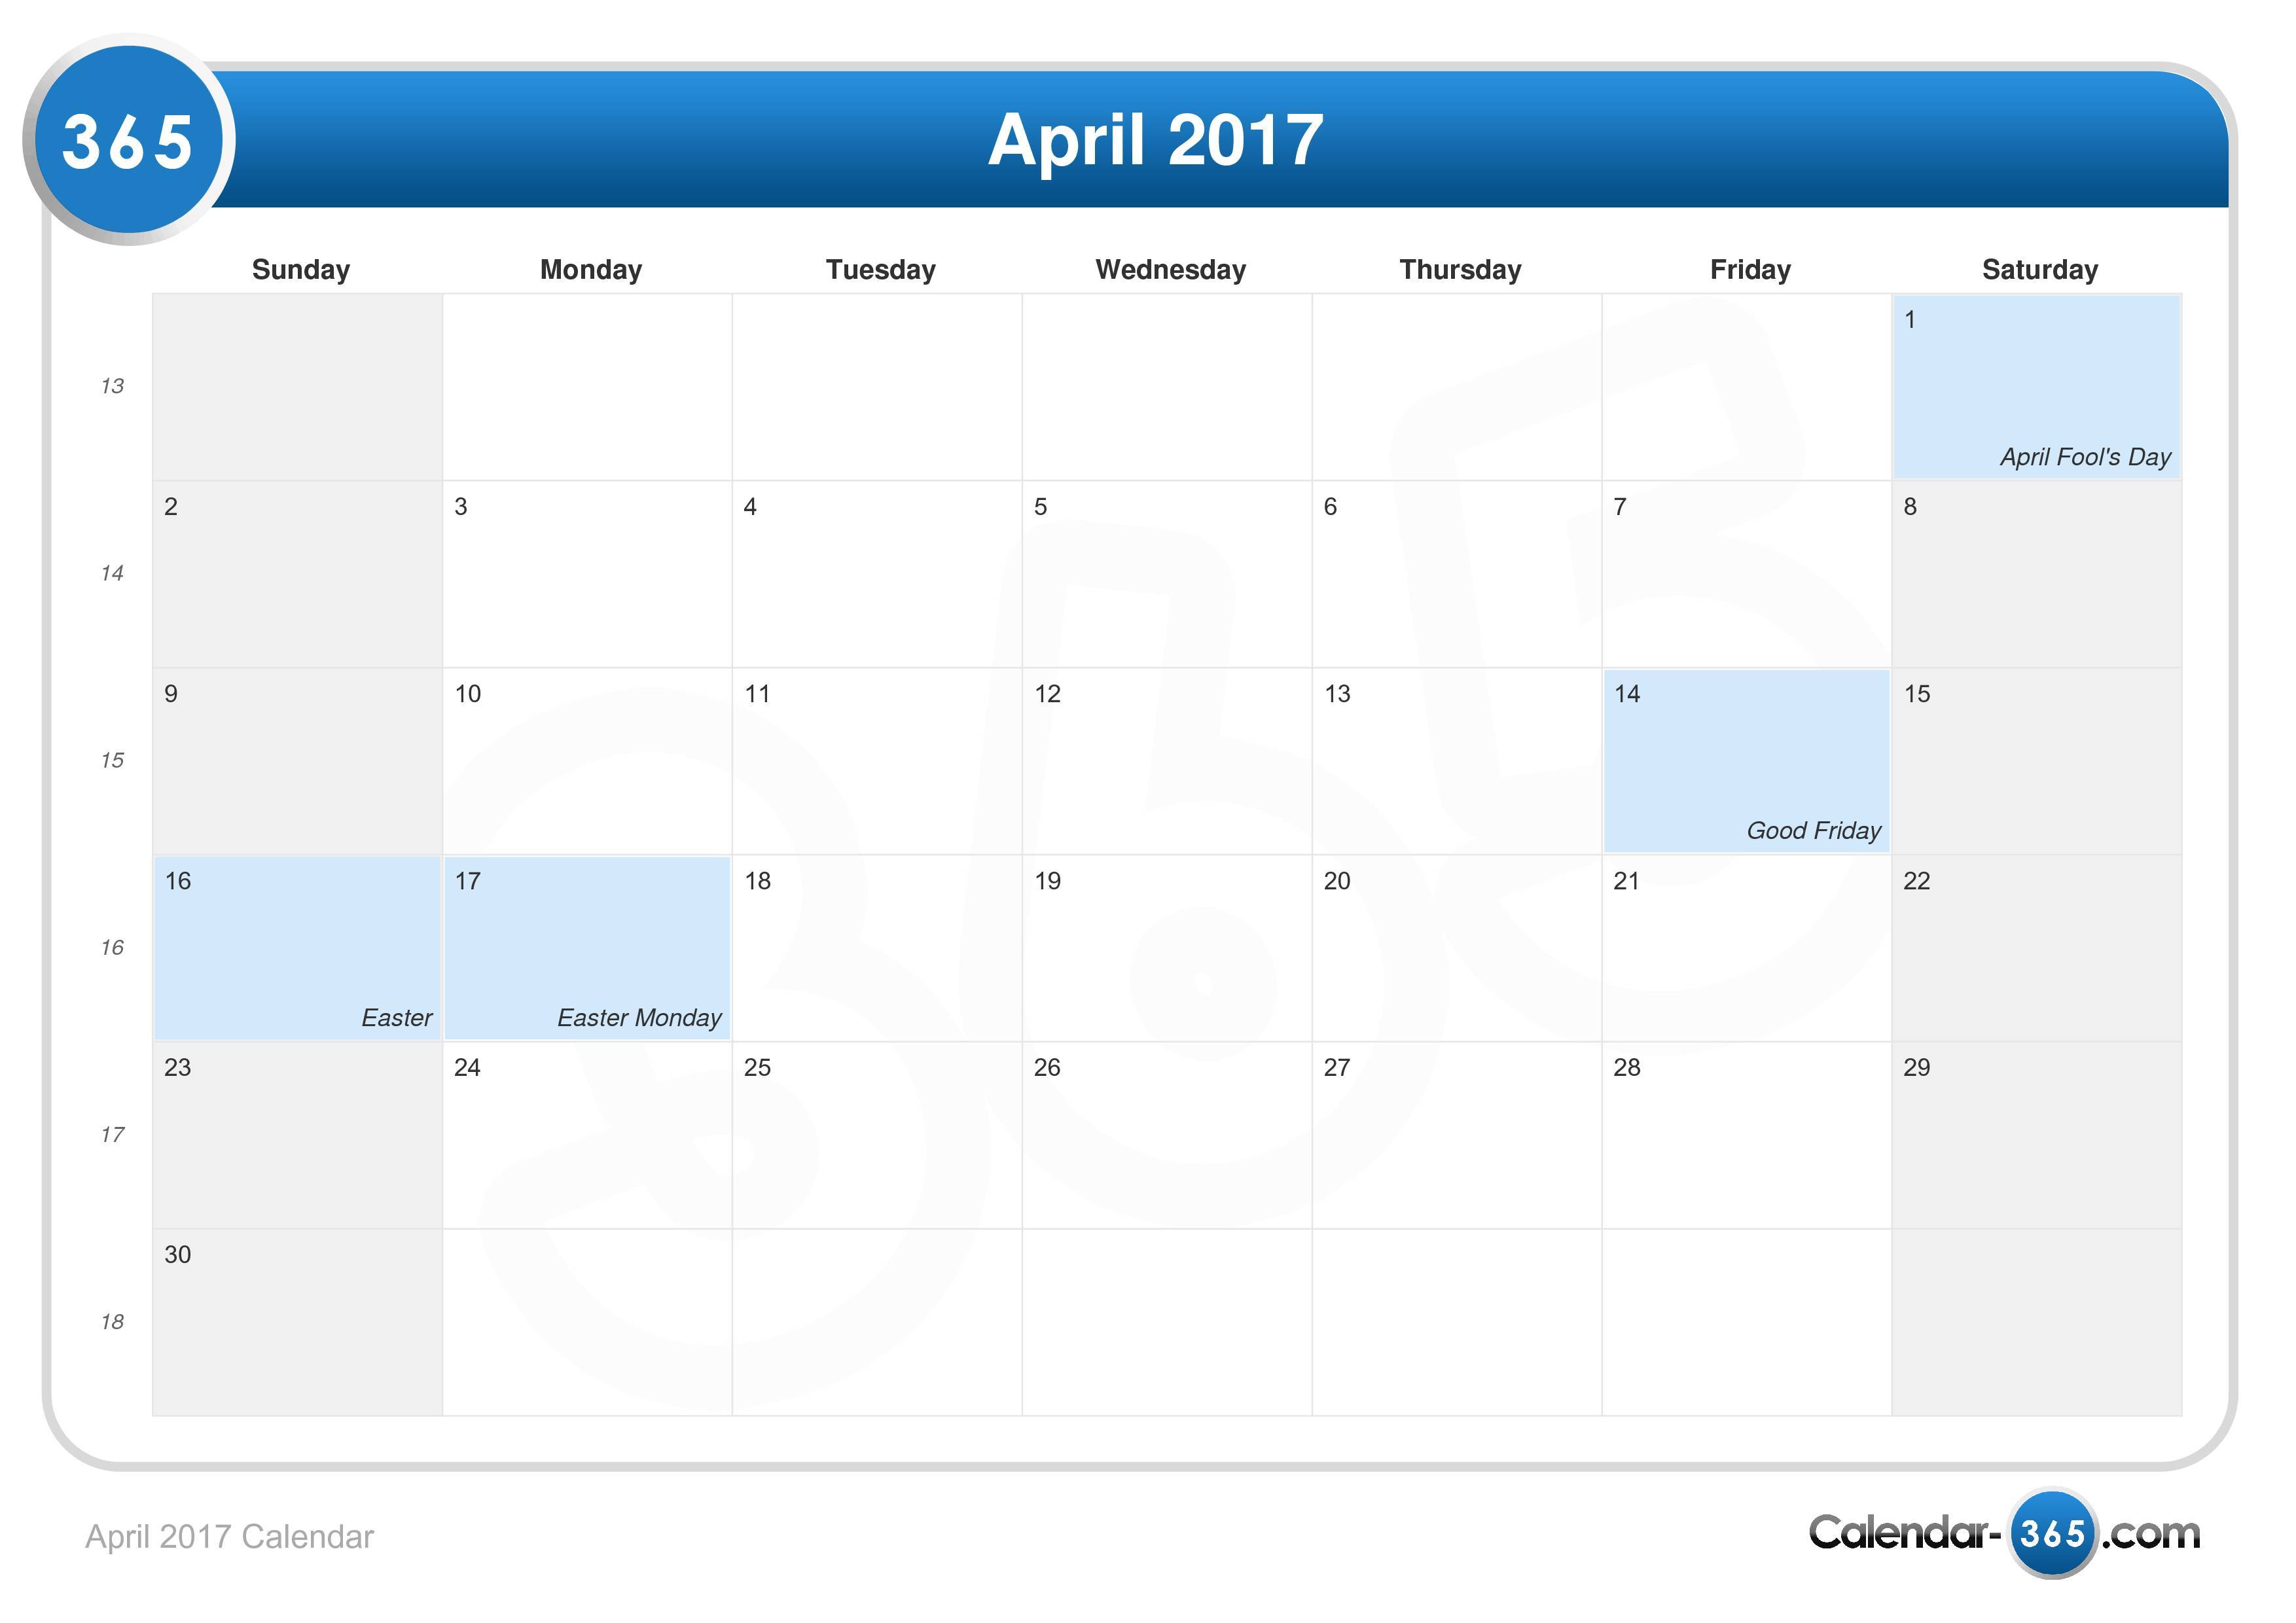 april-2017-calendar